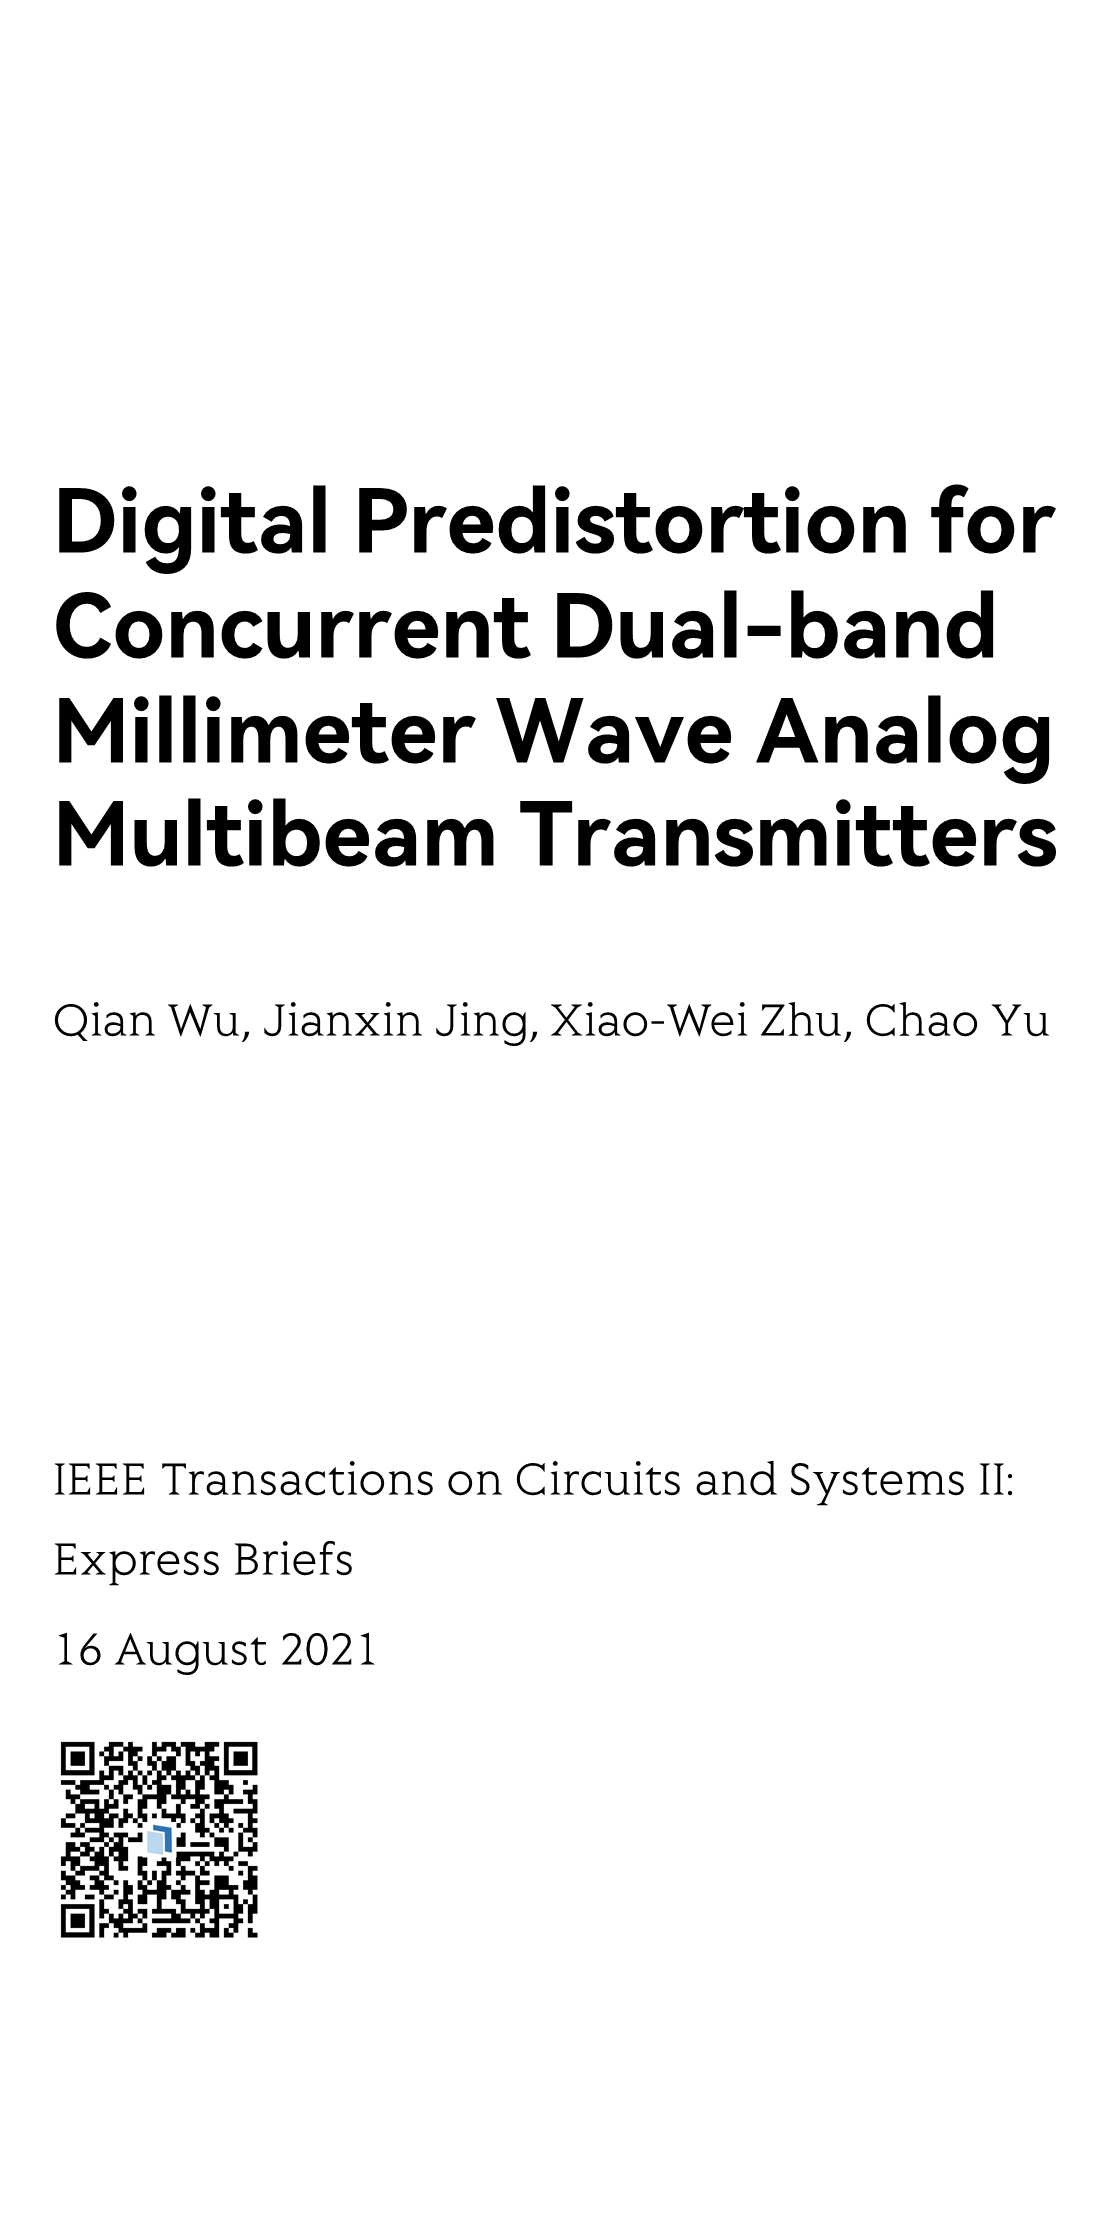 Digital Predistortion for Concurrent Dual-band Millimeter Wave Analog Multibeam Transmitters_1